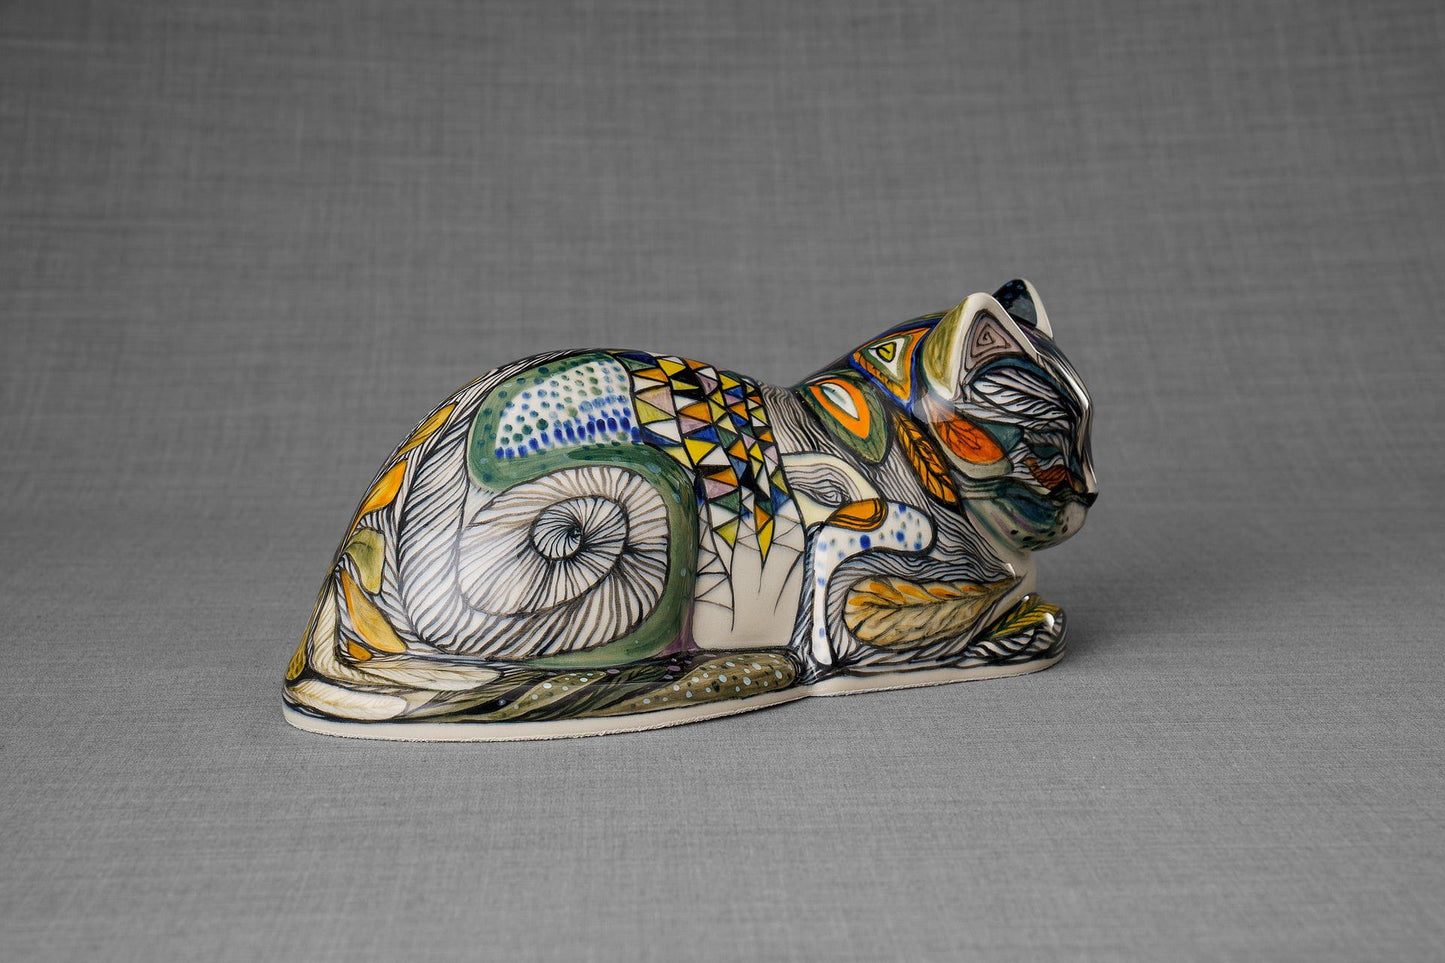 Pulvis Art Urns Pet Urn Hand Decorated Cat Urn for Ashes "Dream" - Ceramic | Handmade